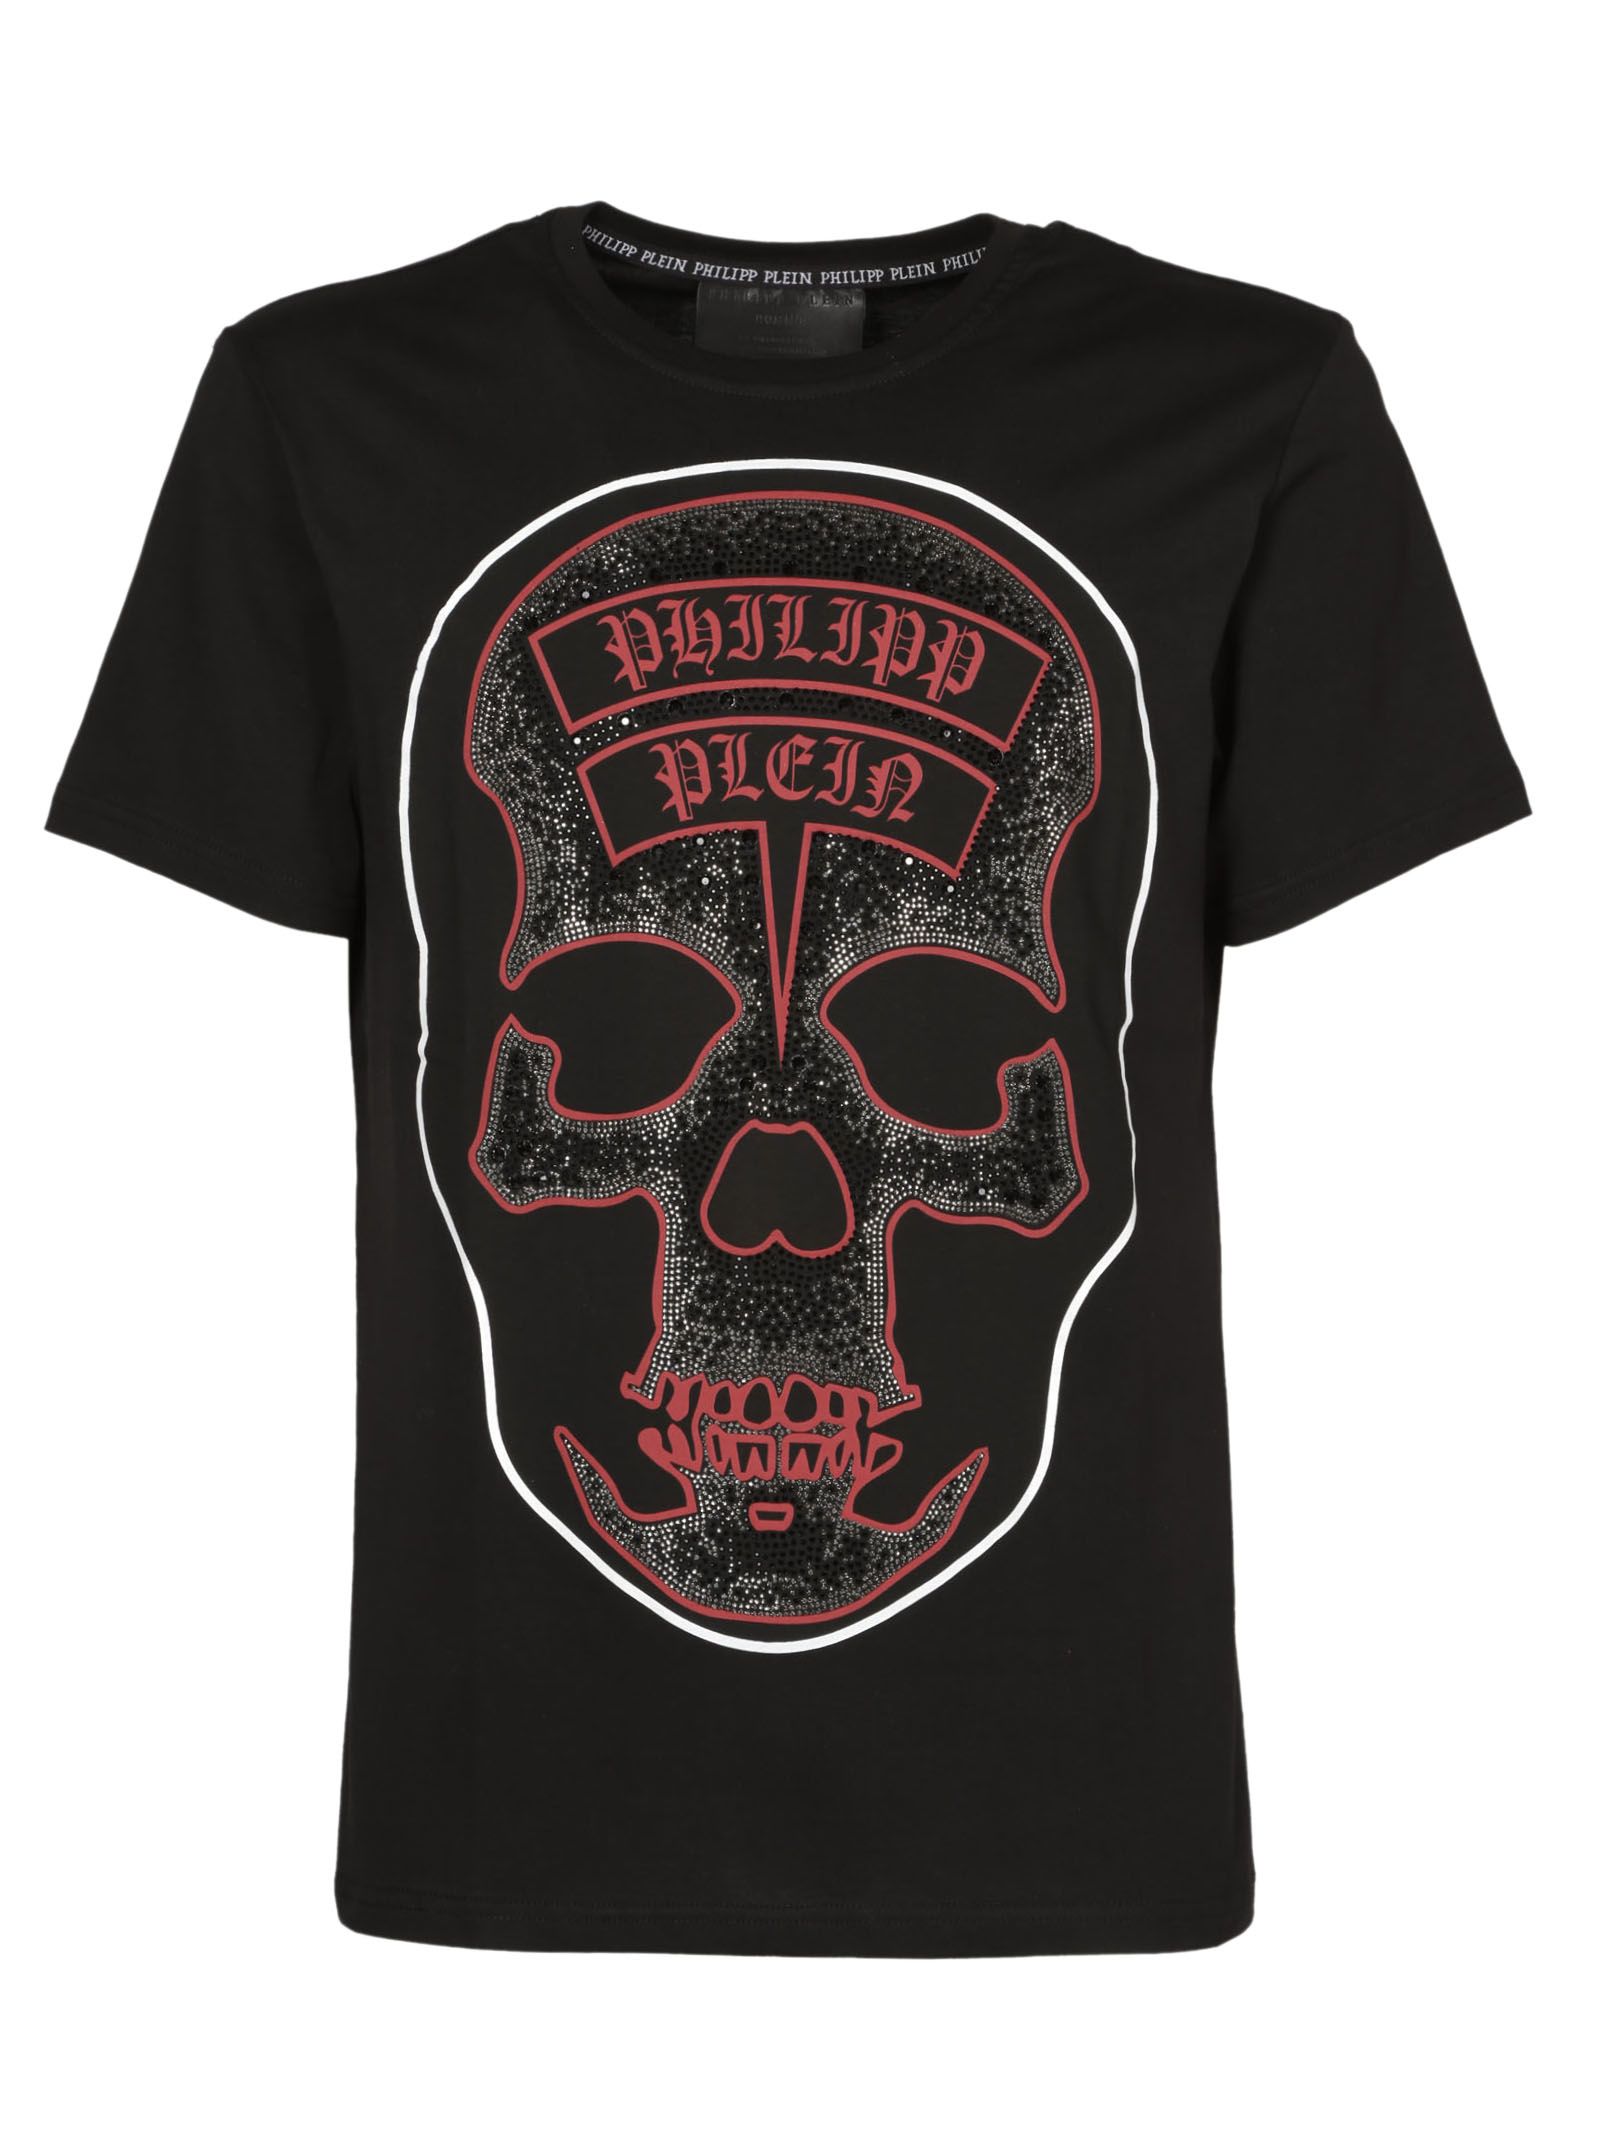 Philipp Plein - Philipp Plein T-shirt Sata - Black+red sport, Men's ...